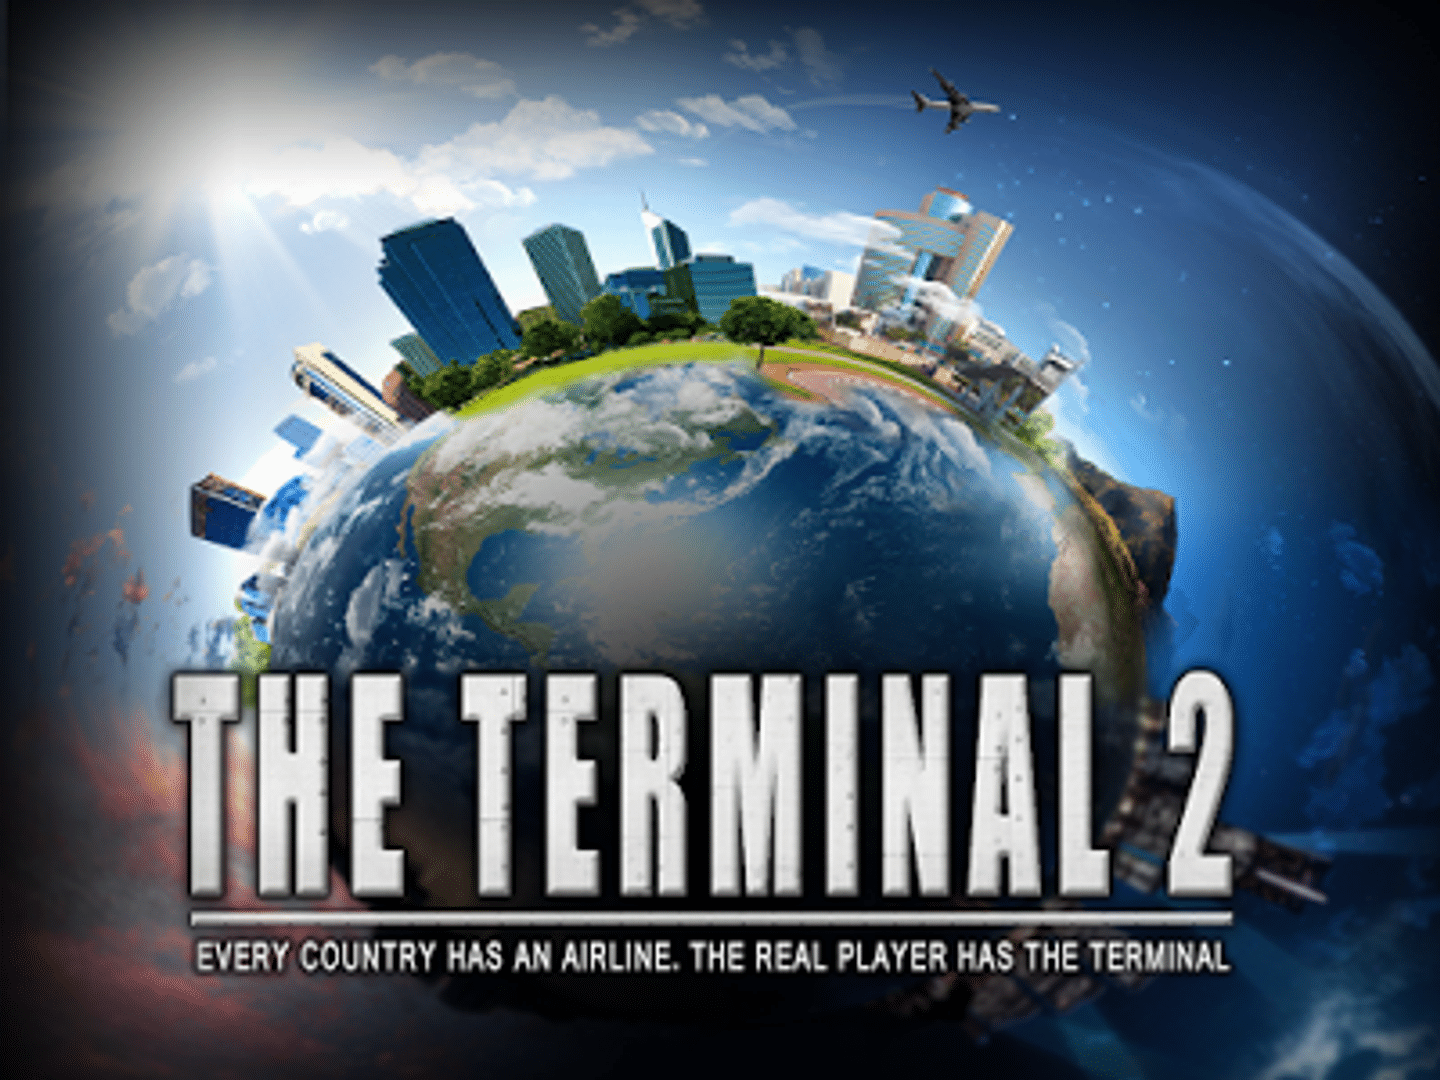 Gaming terminal. Terminal game. Terminus game. The Terminal 2. Term 2.